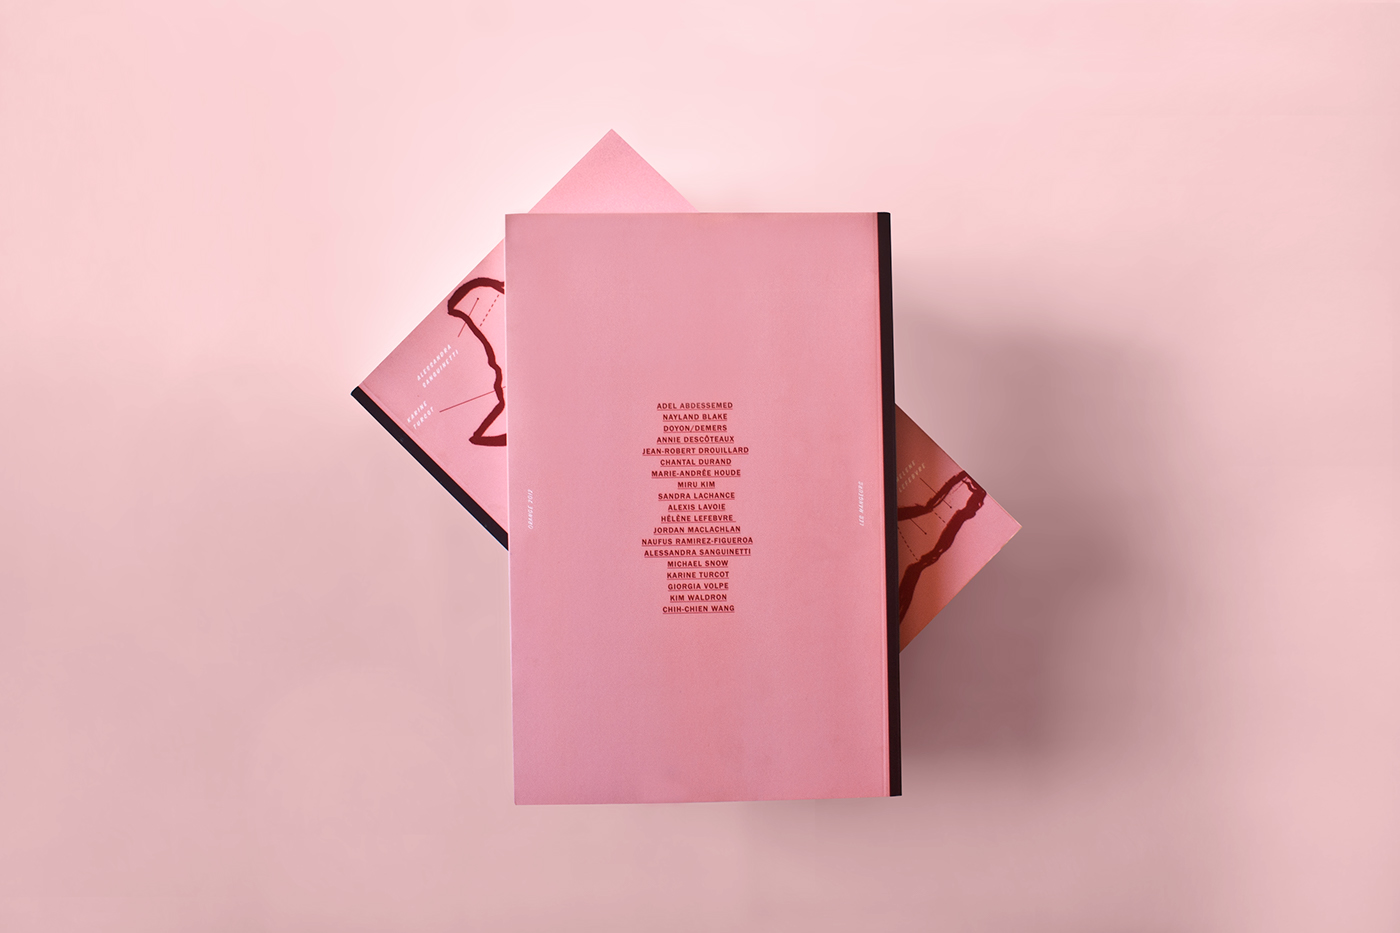 Food  contemporary art Eating  pig pink art book editorial